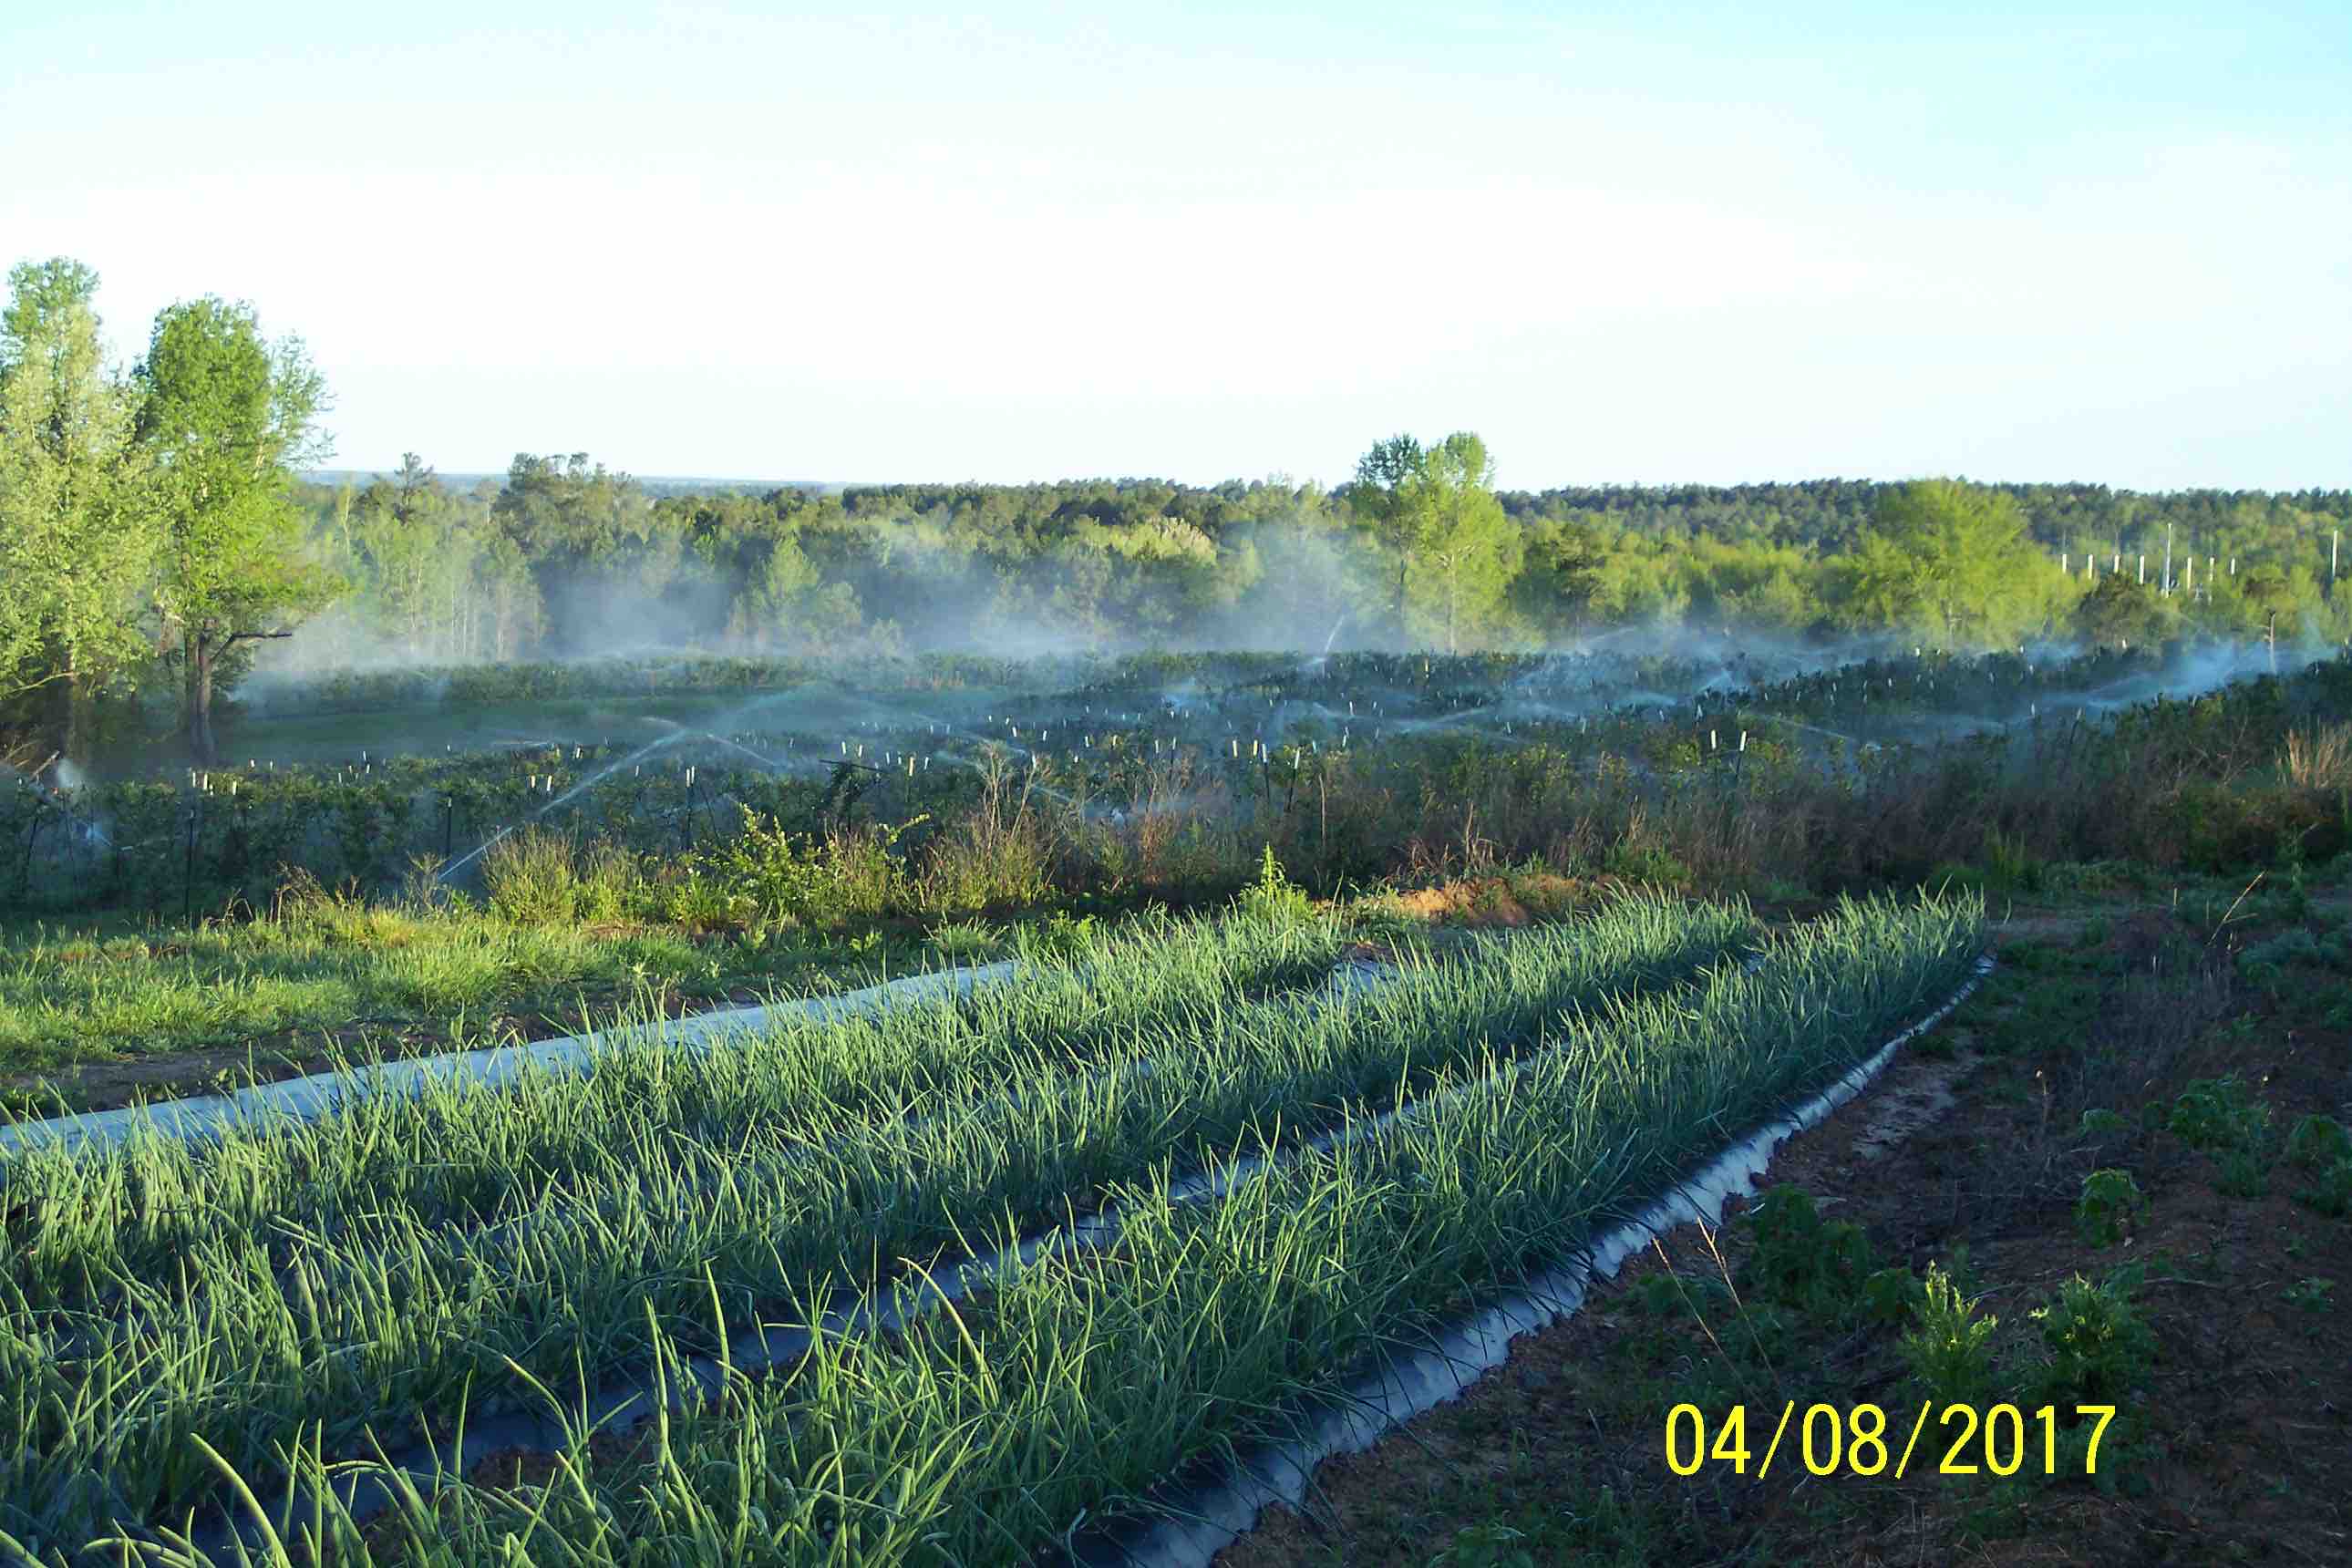 irrigating fields